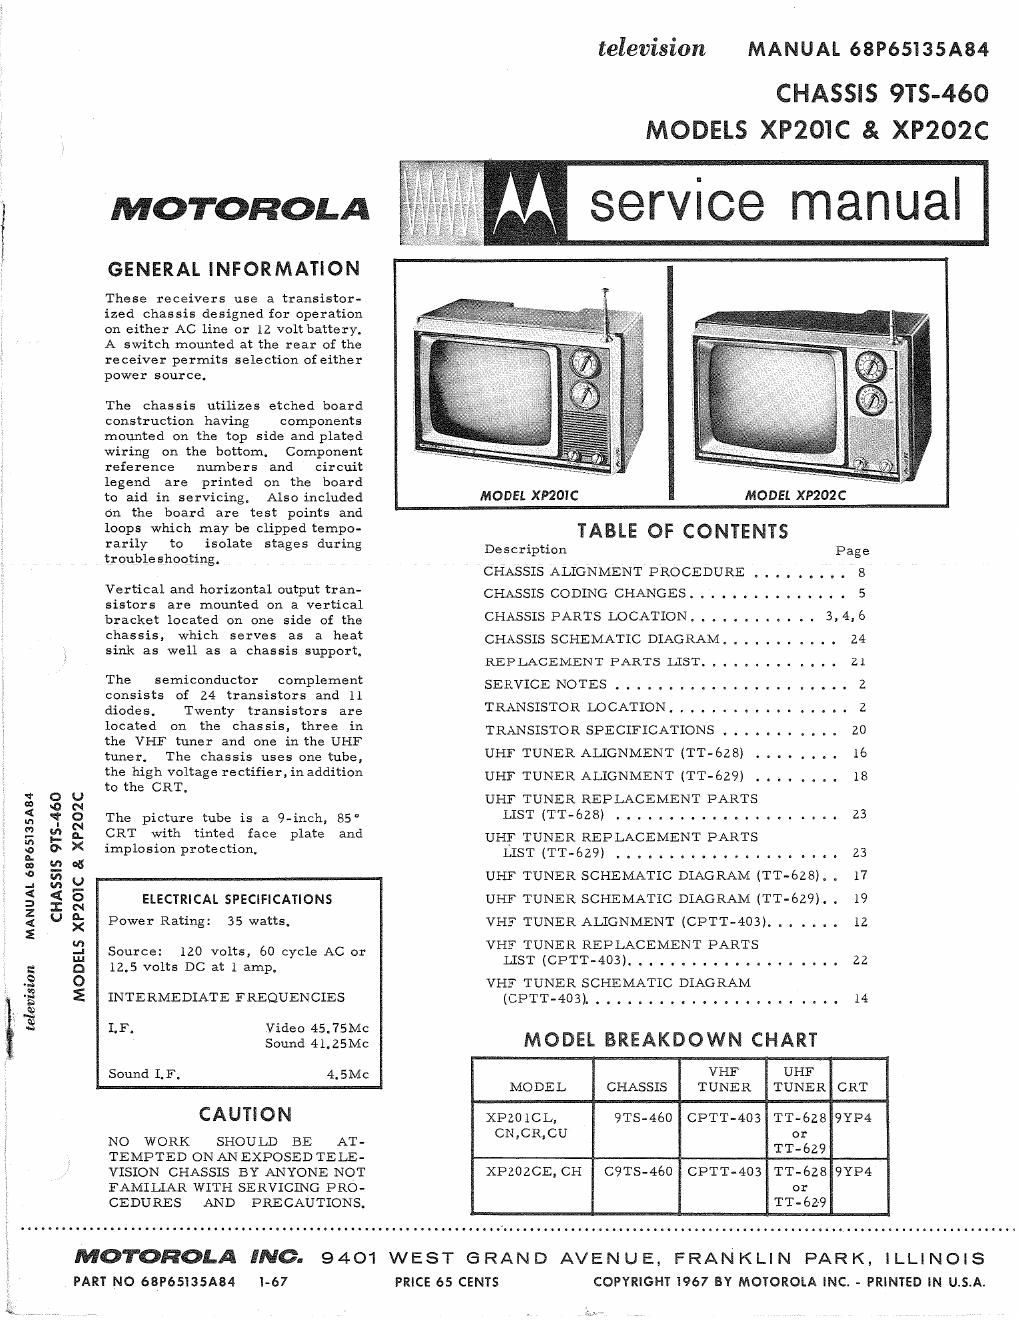 motorola xp 202 c service manual